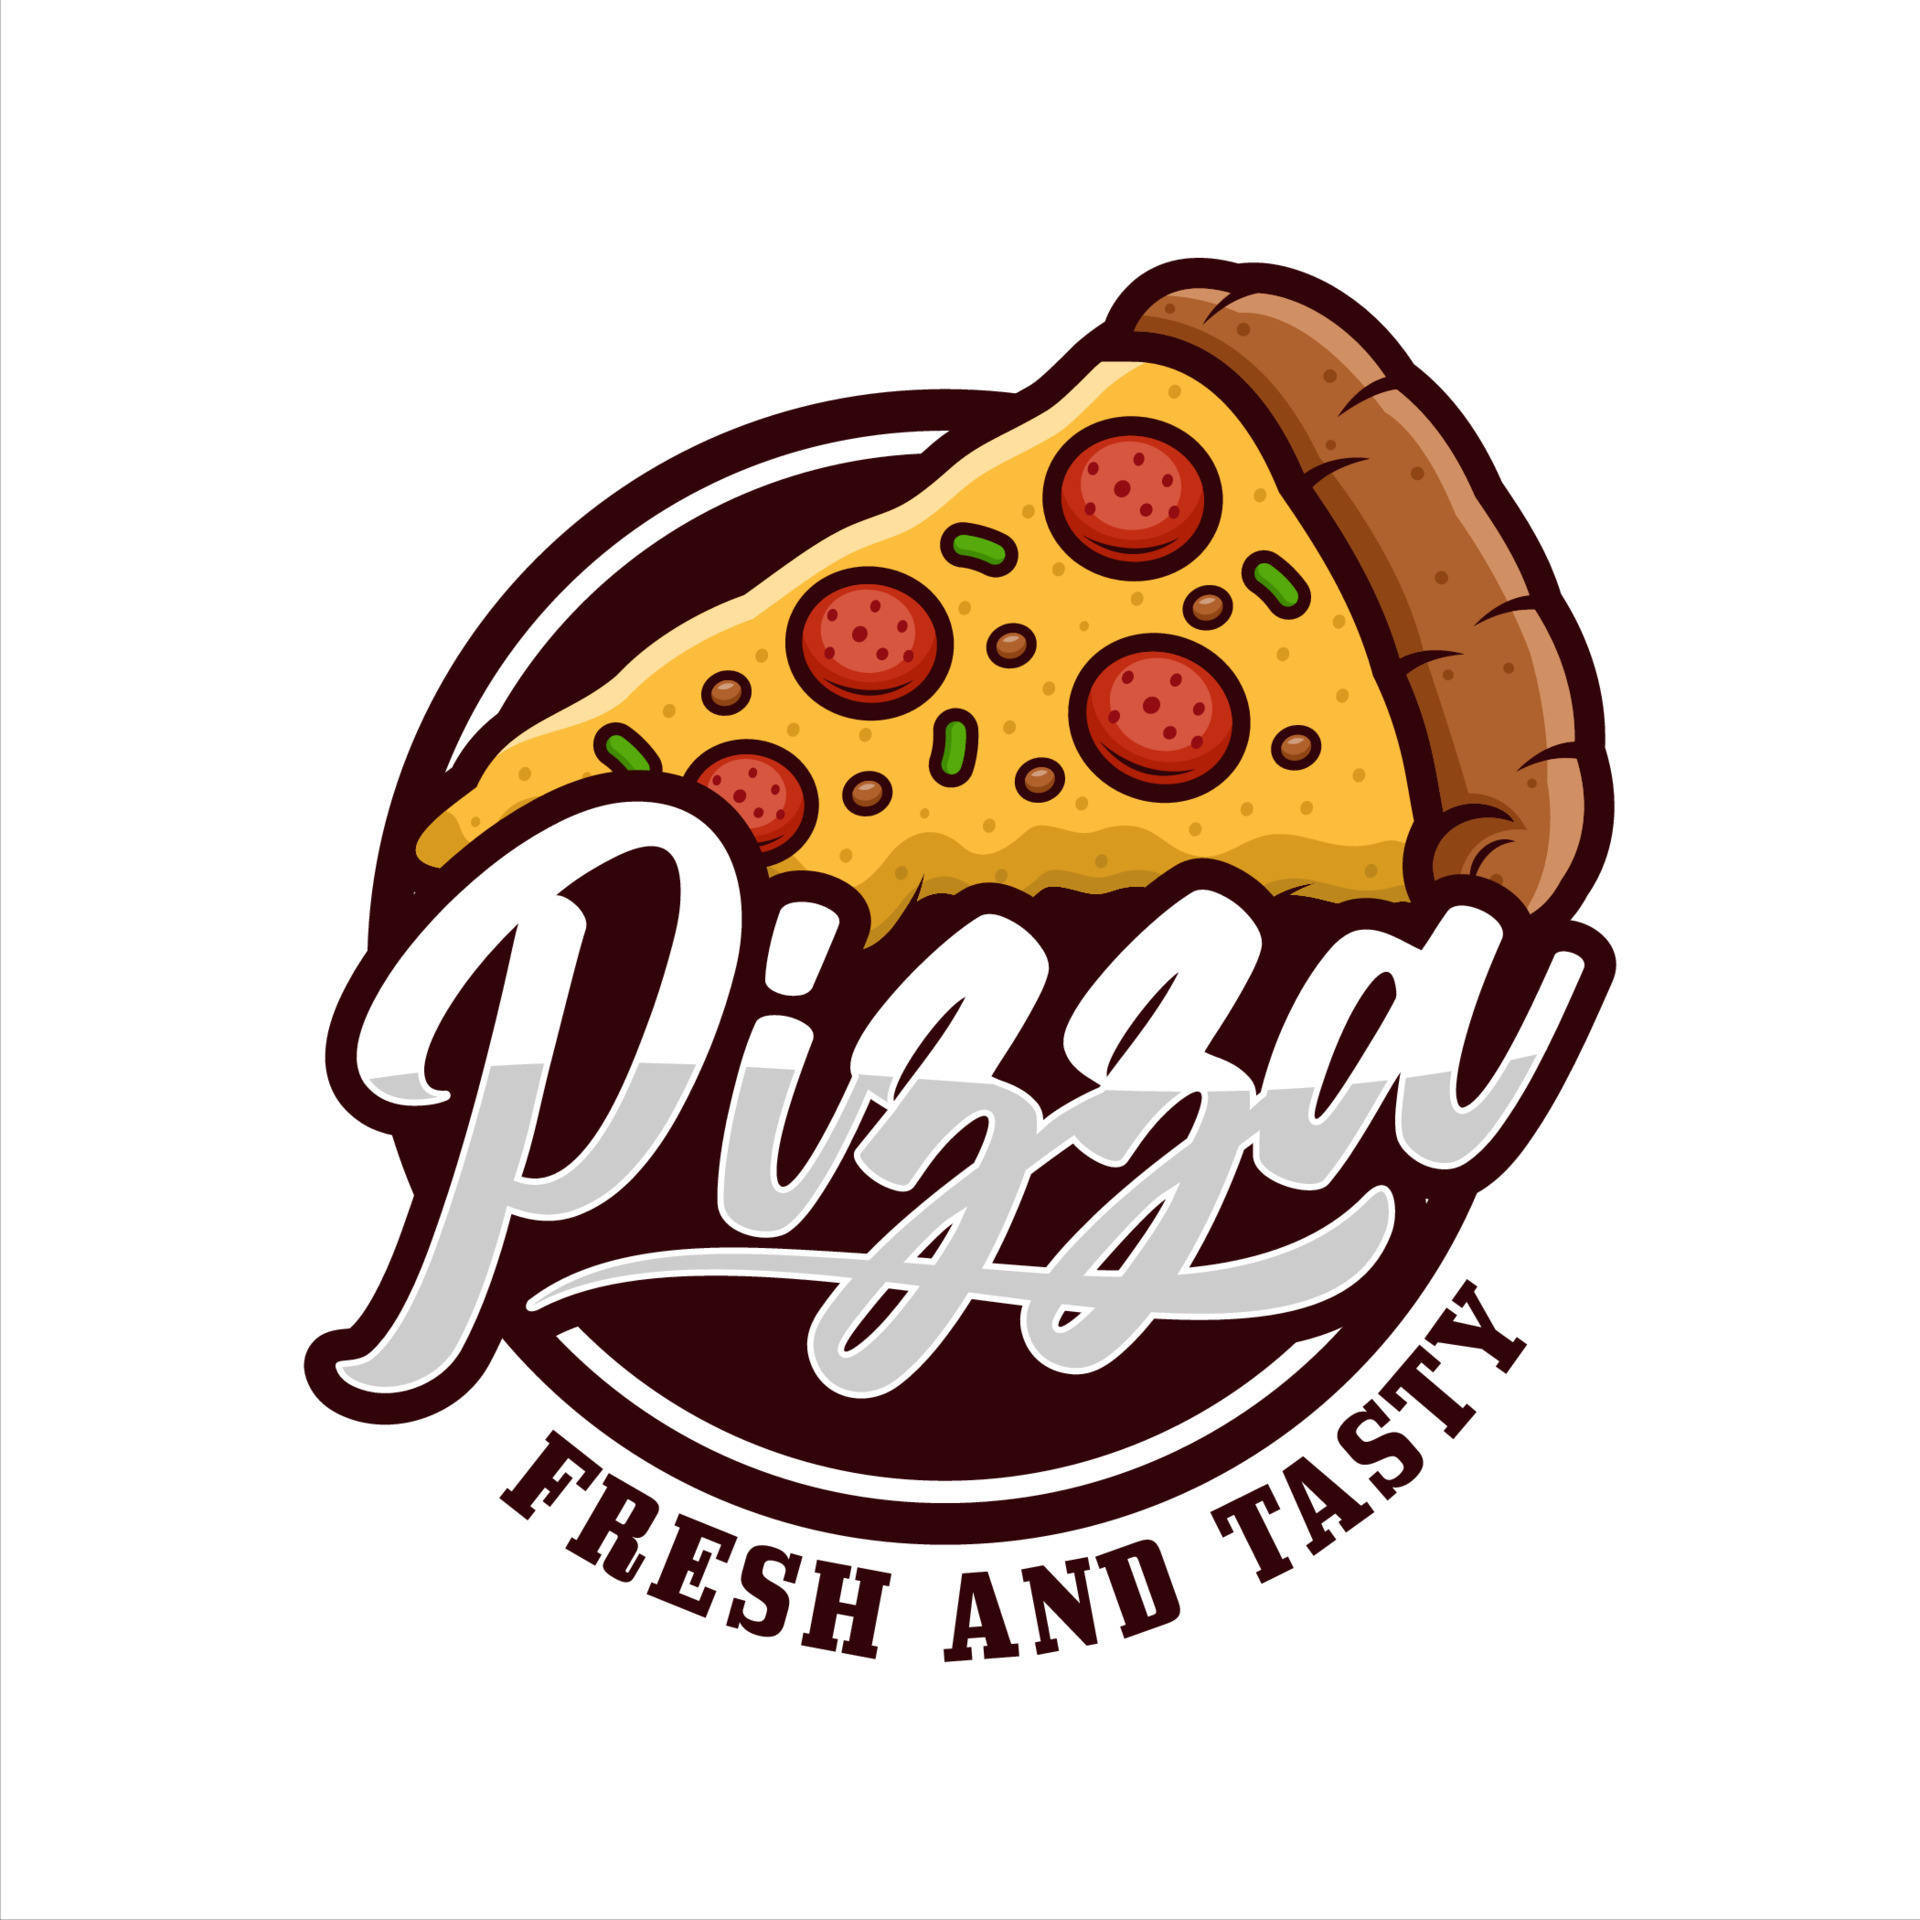 Premium Vector, Pizza logo design vector template